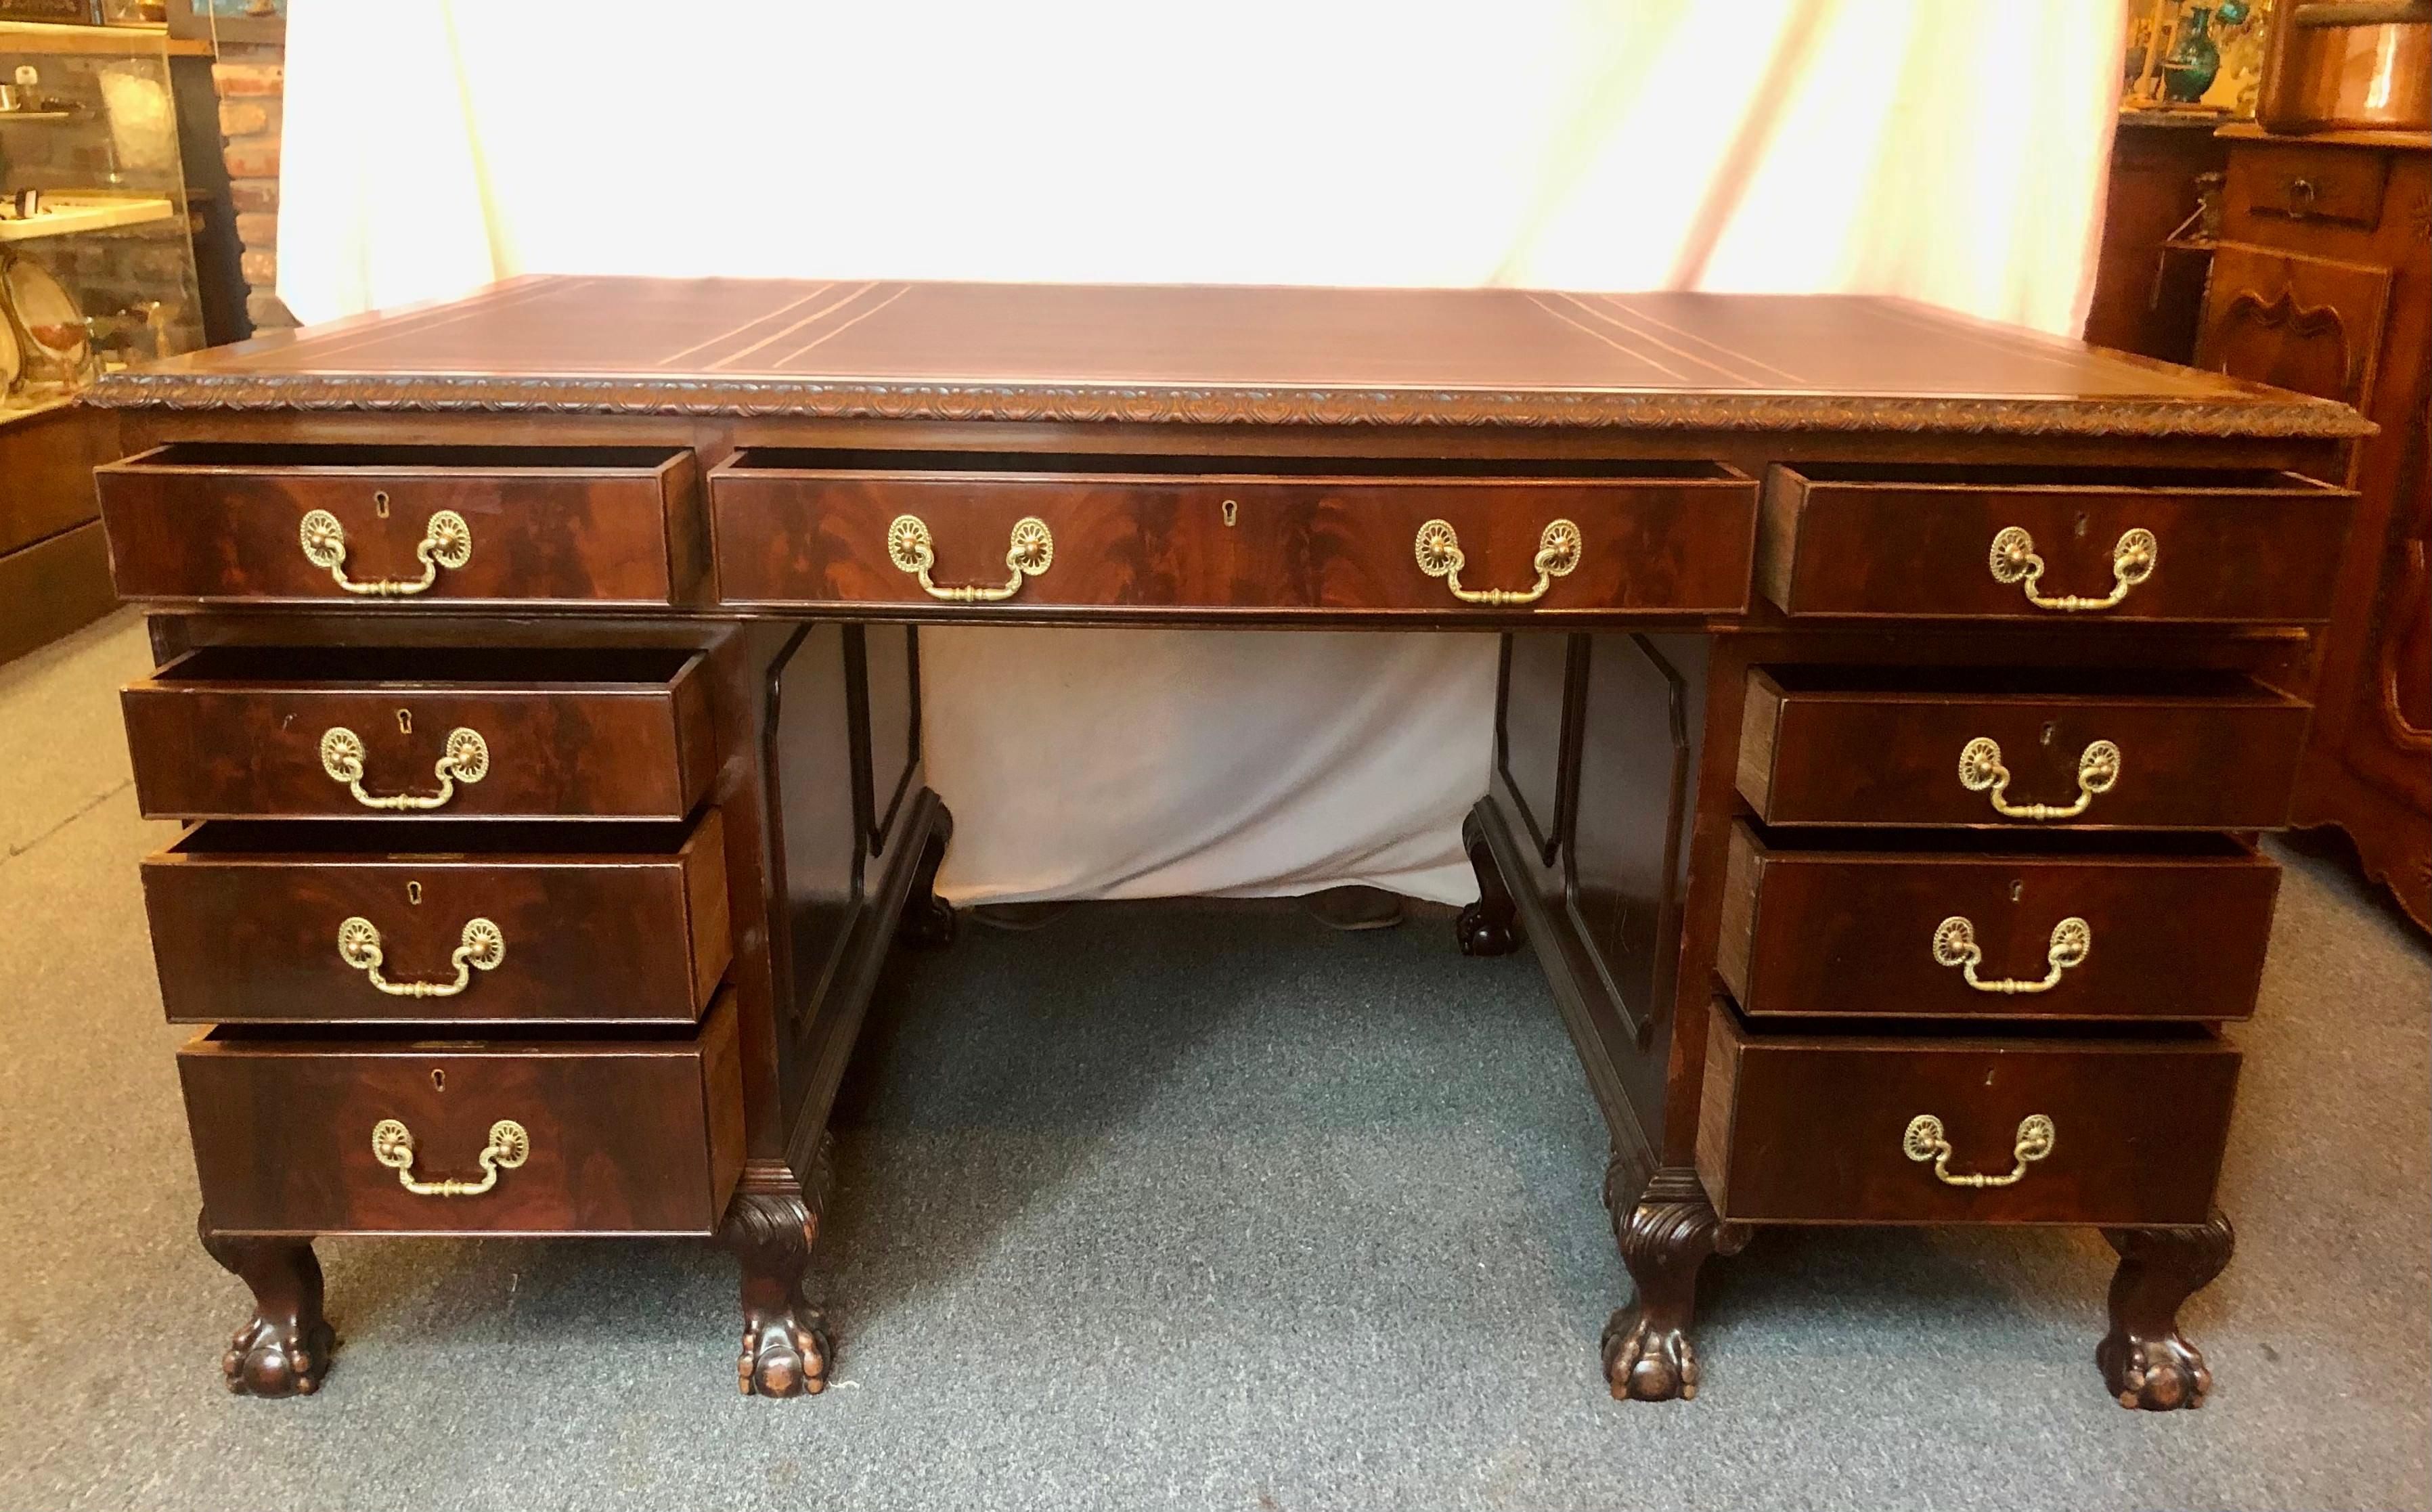 Antique English mahogany partner's desk Chippendale design Circa 1900-1920. Original hardware and new leather.